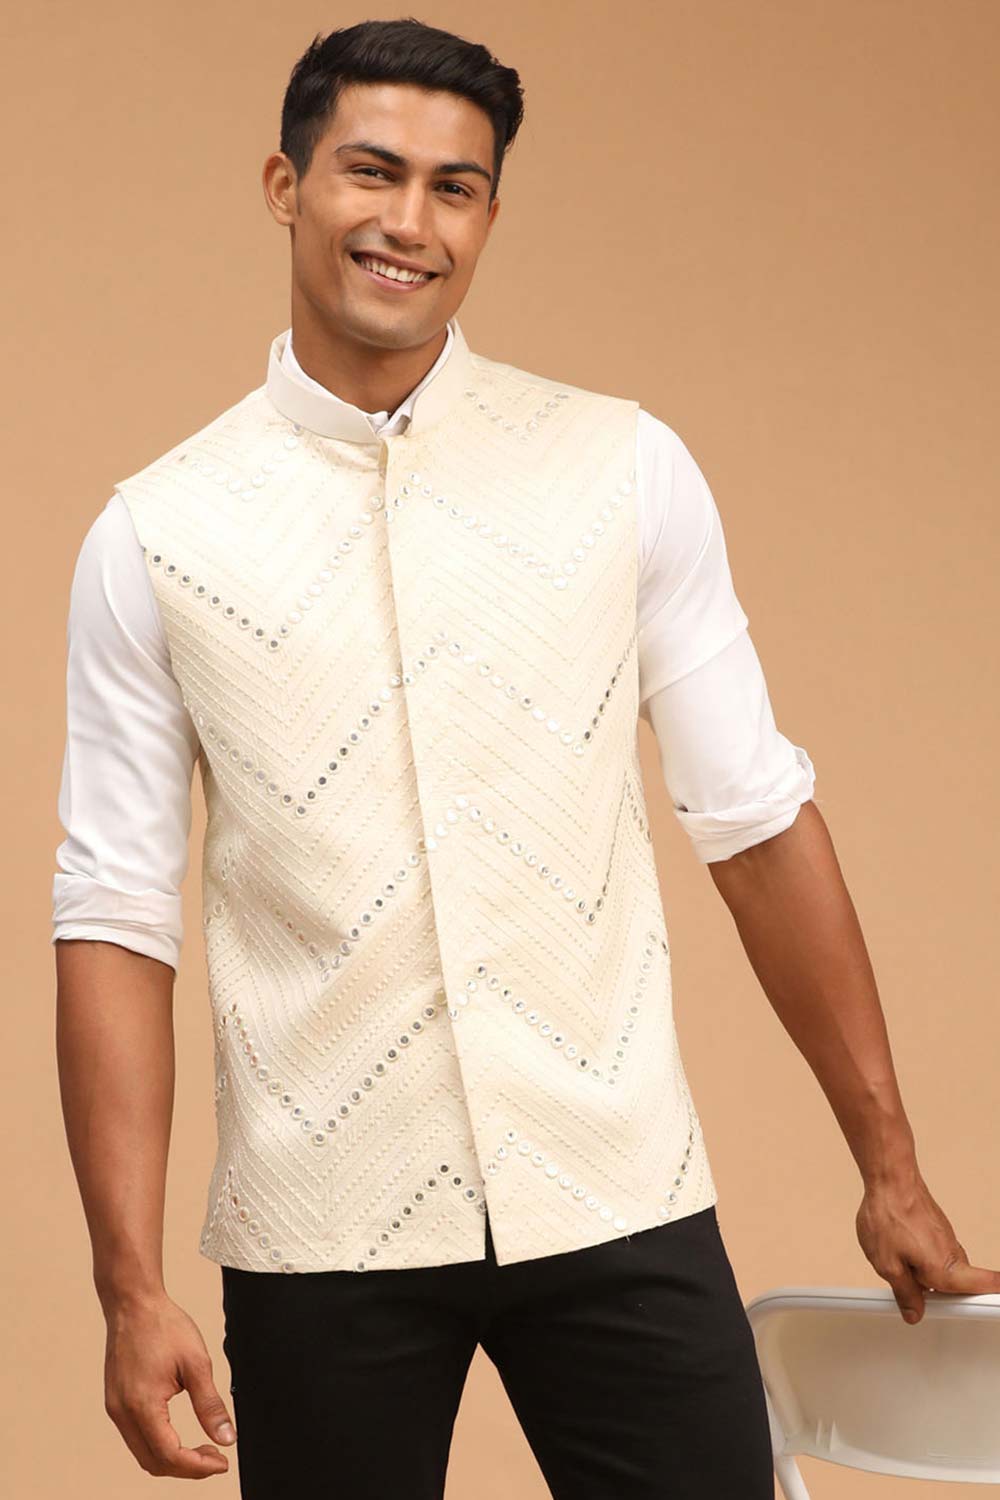 Buy BLACKSMITH Premium Linen Nehru/Modi Jacket for Men - Wedding Nehru Coat  (LIGHT BLUE,42) at Amazon.in